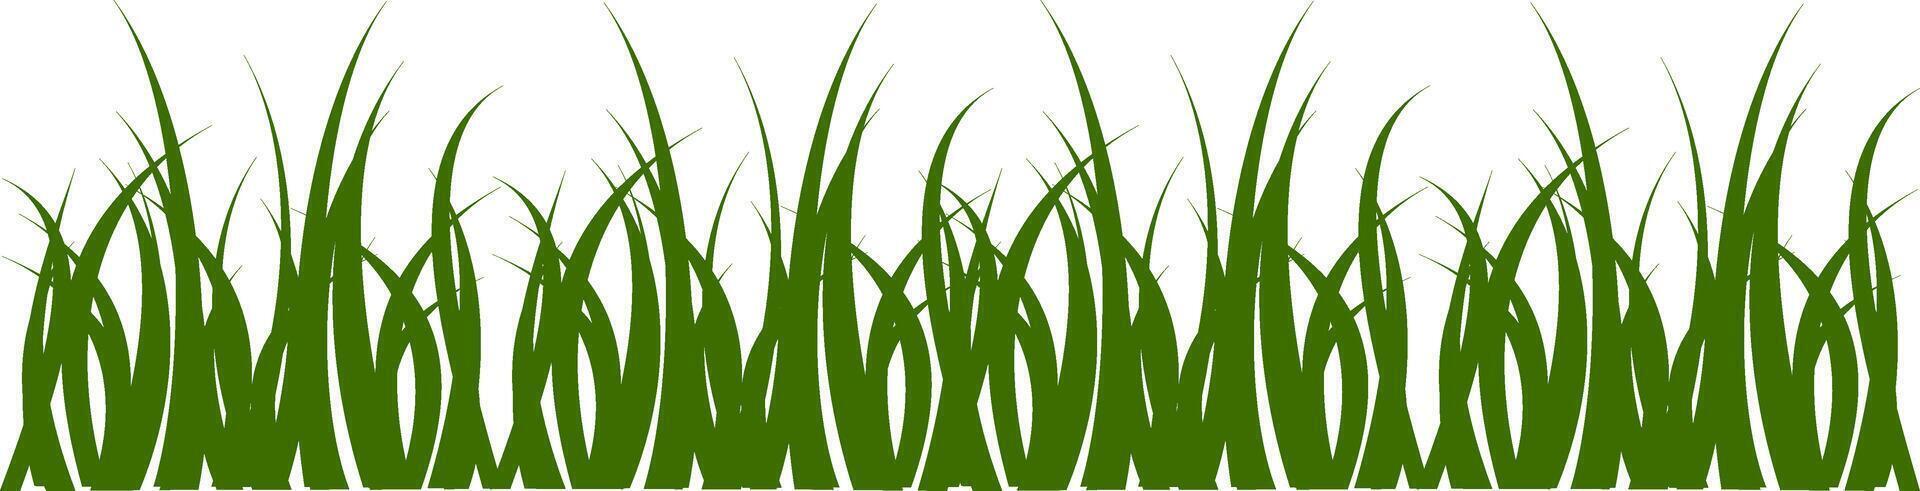 Border.grass Tufts of grass illustration vector